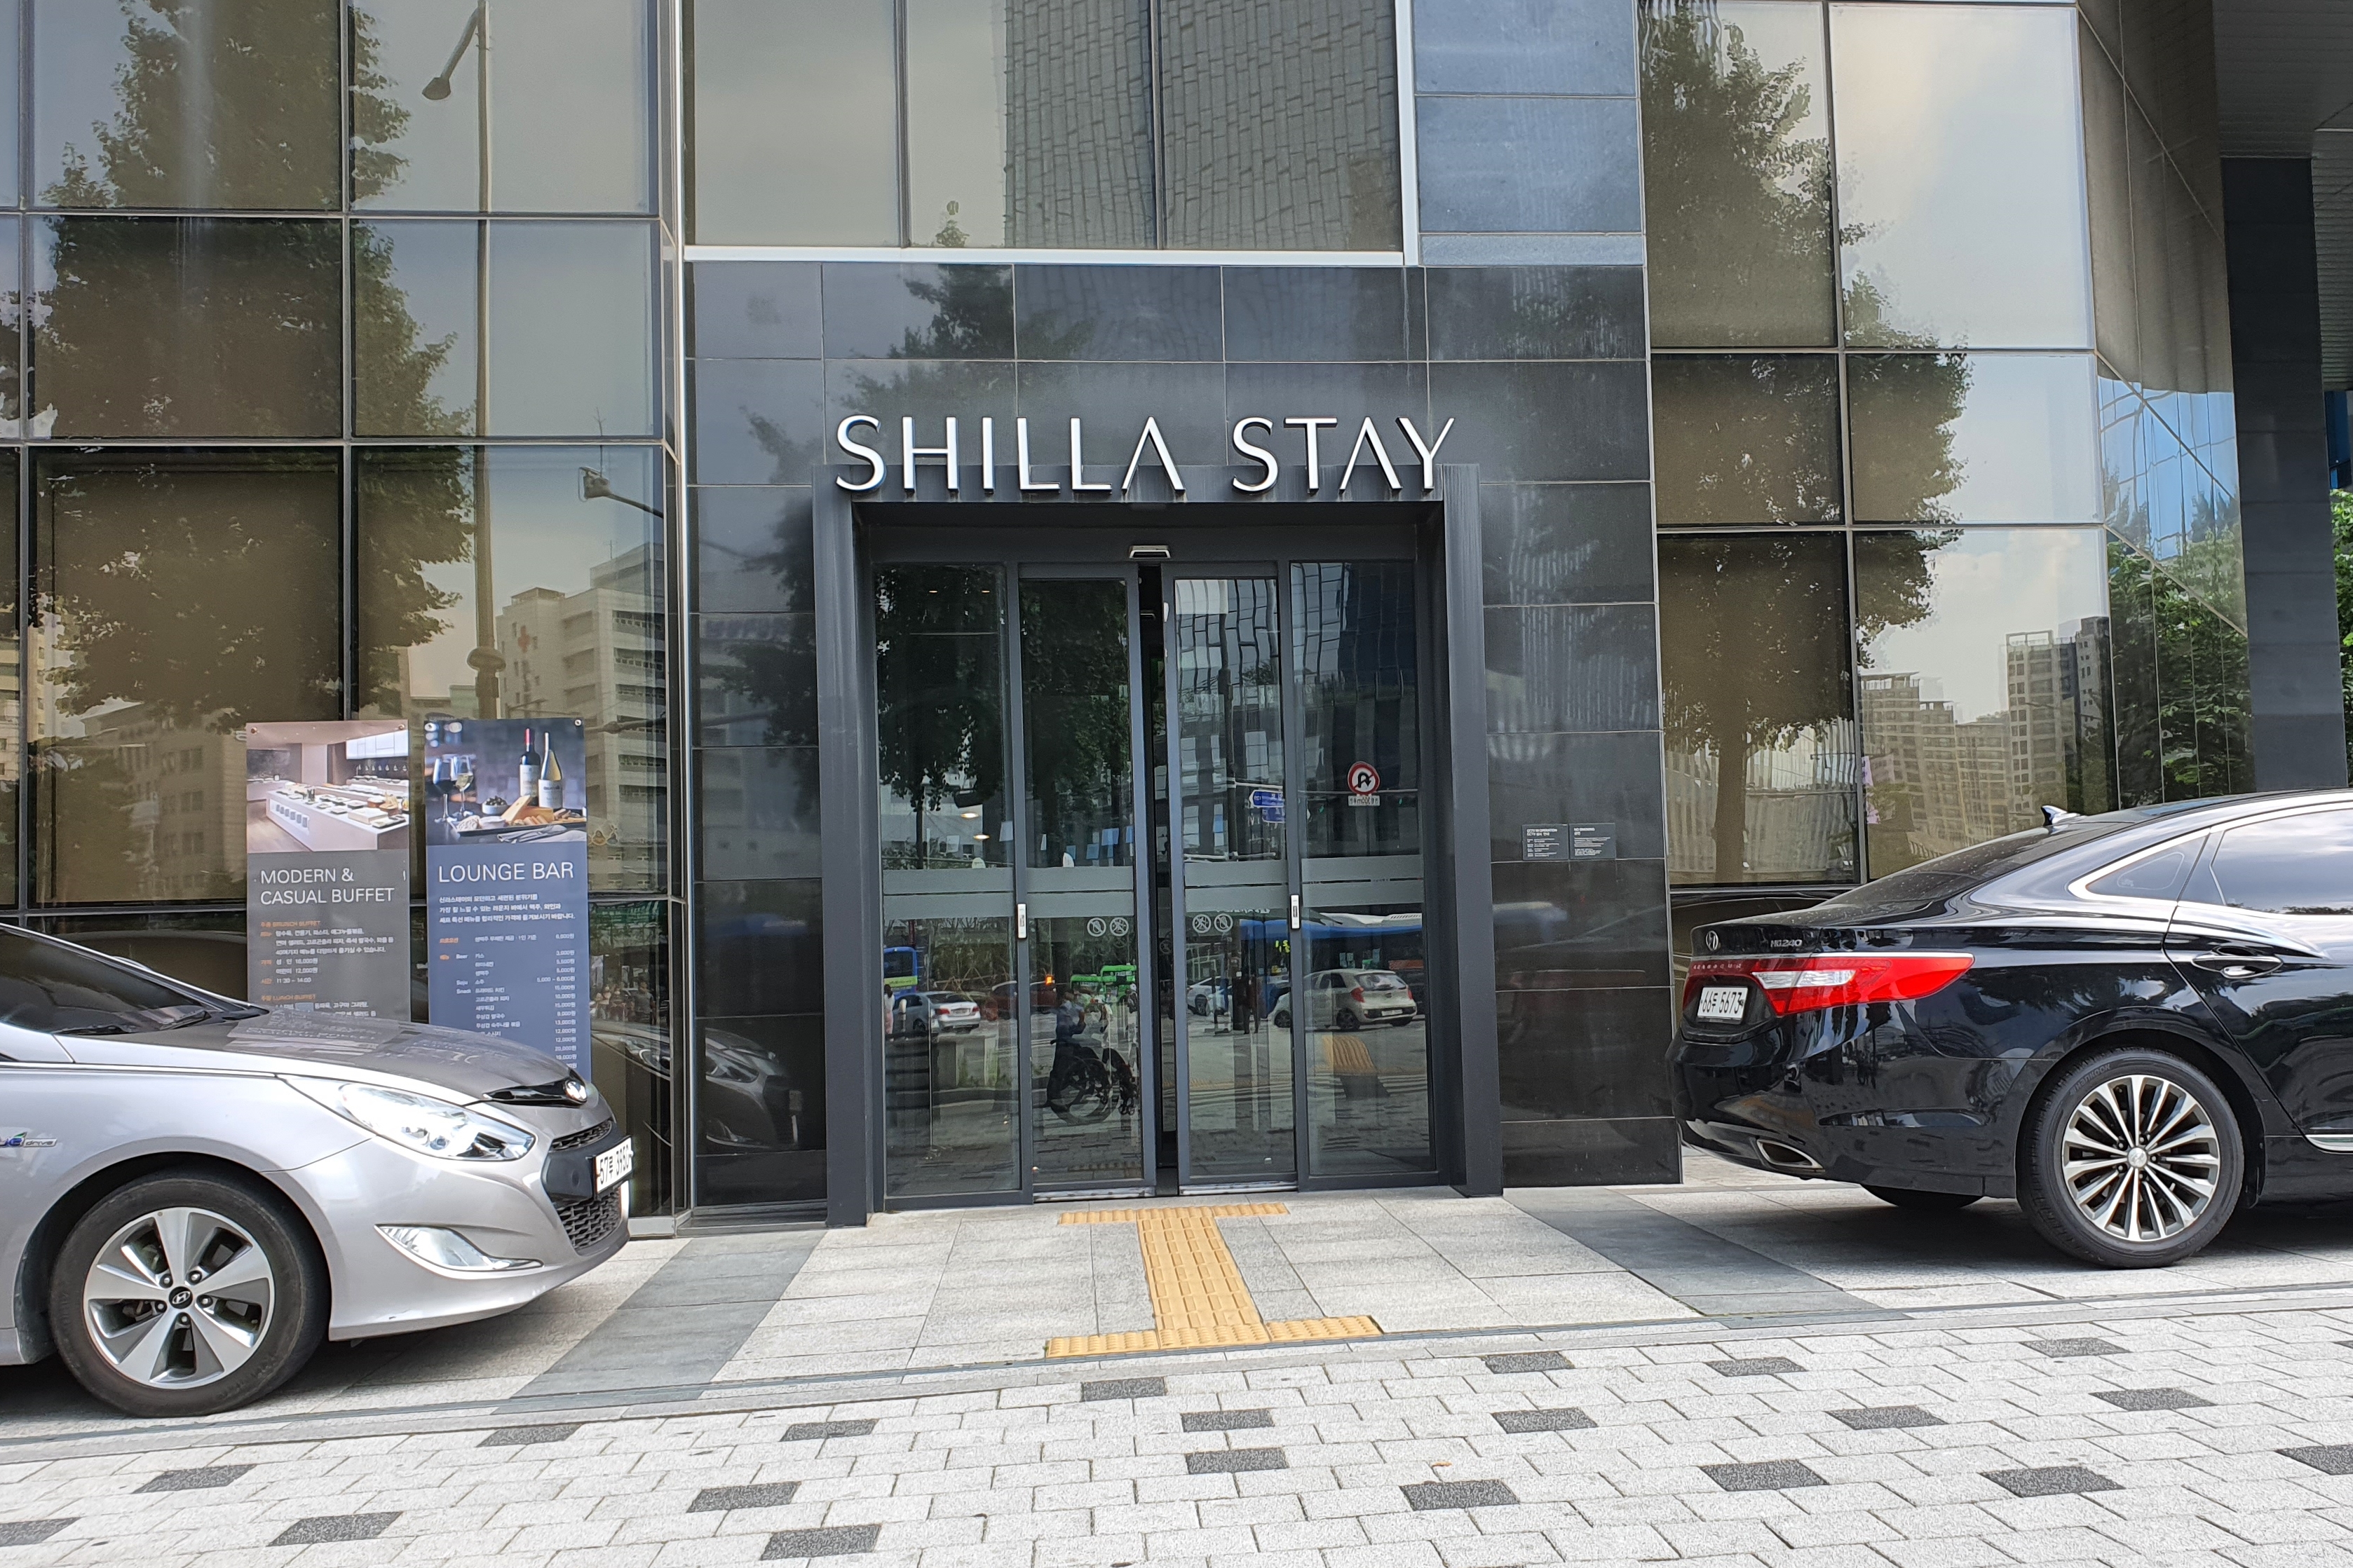 Shilla Stay Seodaemun1 : Main entrance of the Shilla Stay Seodaemun with flat floor and tactile paving
